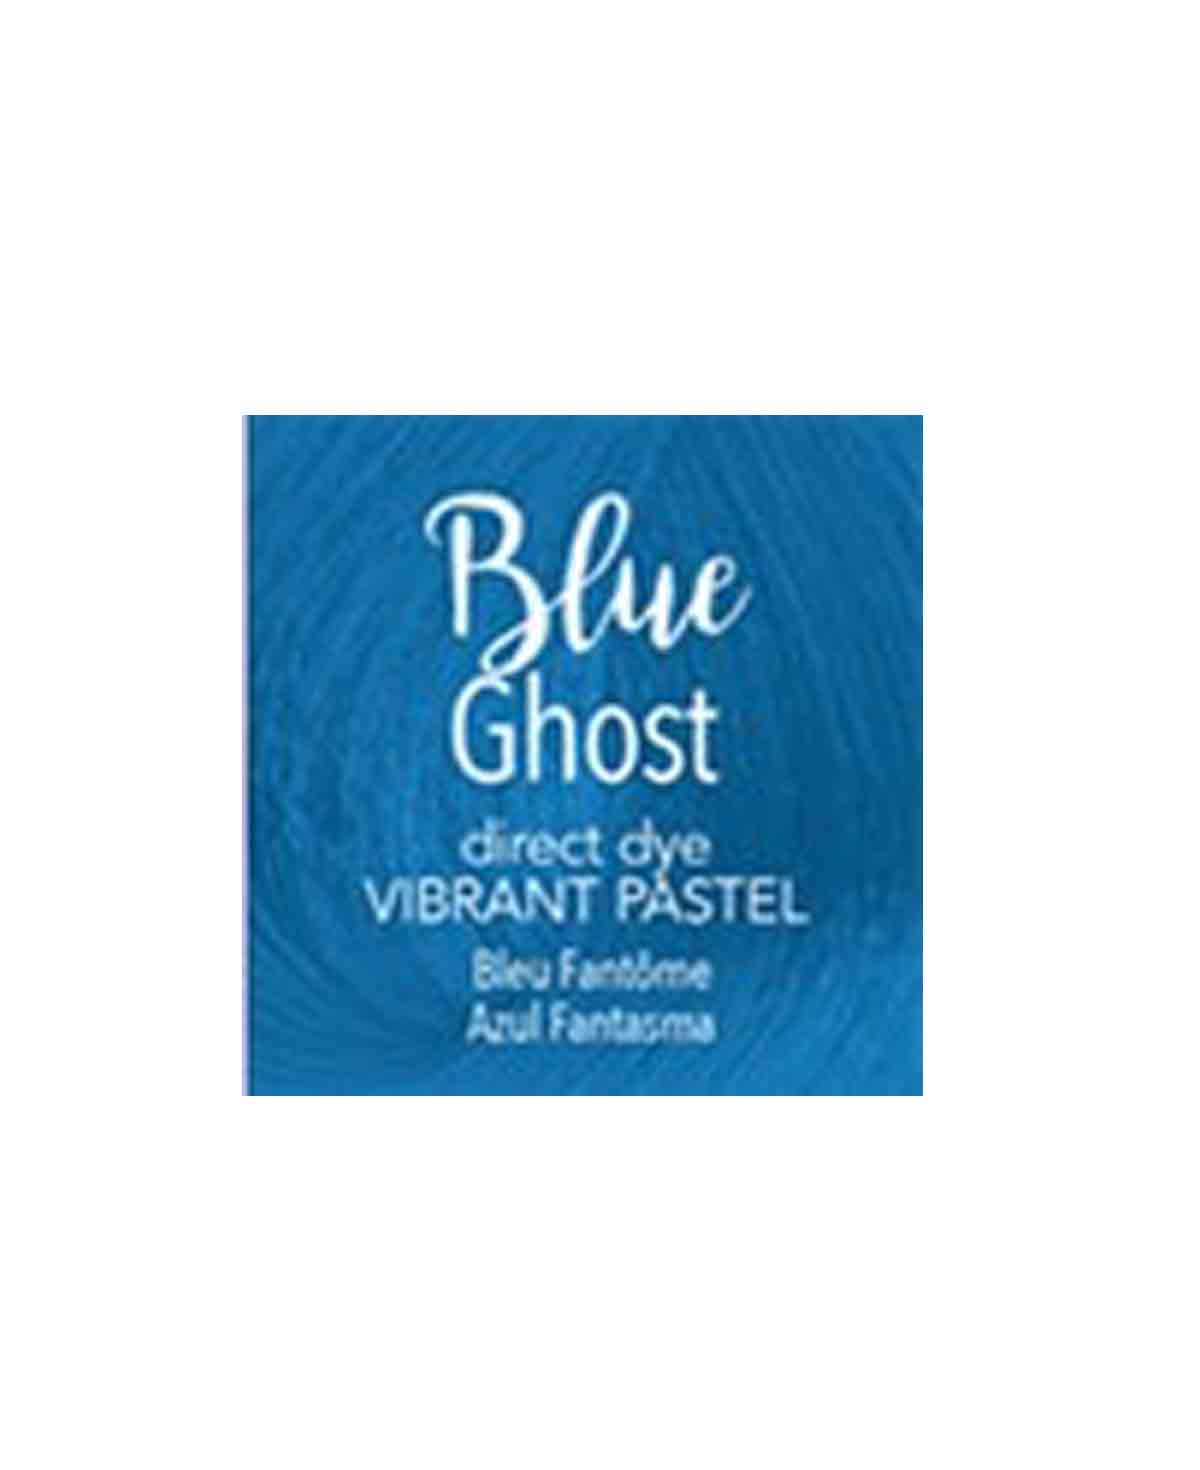 Mydentity - SPDD Pastel Blue Ghost